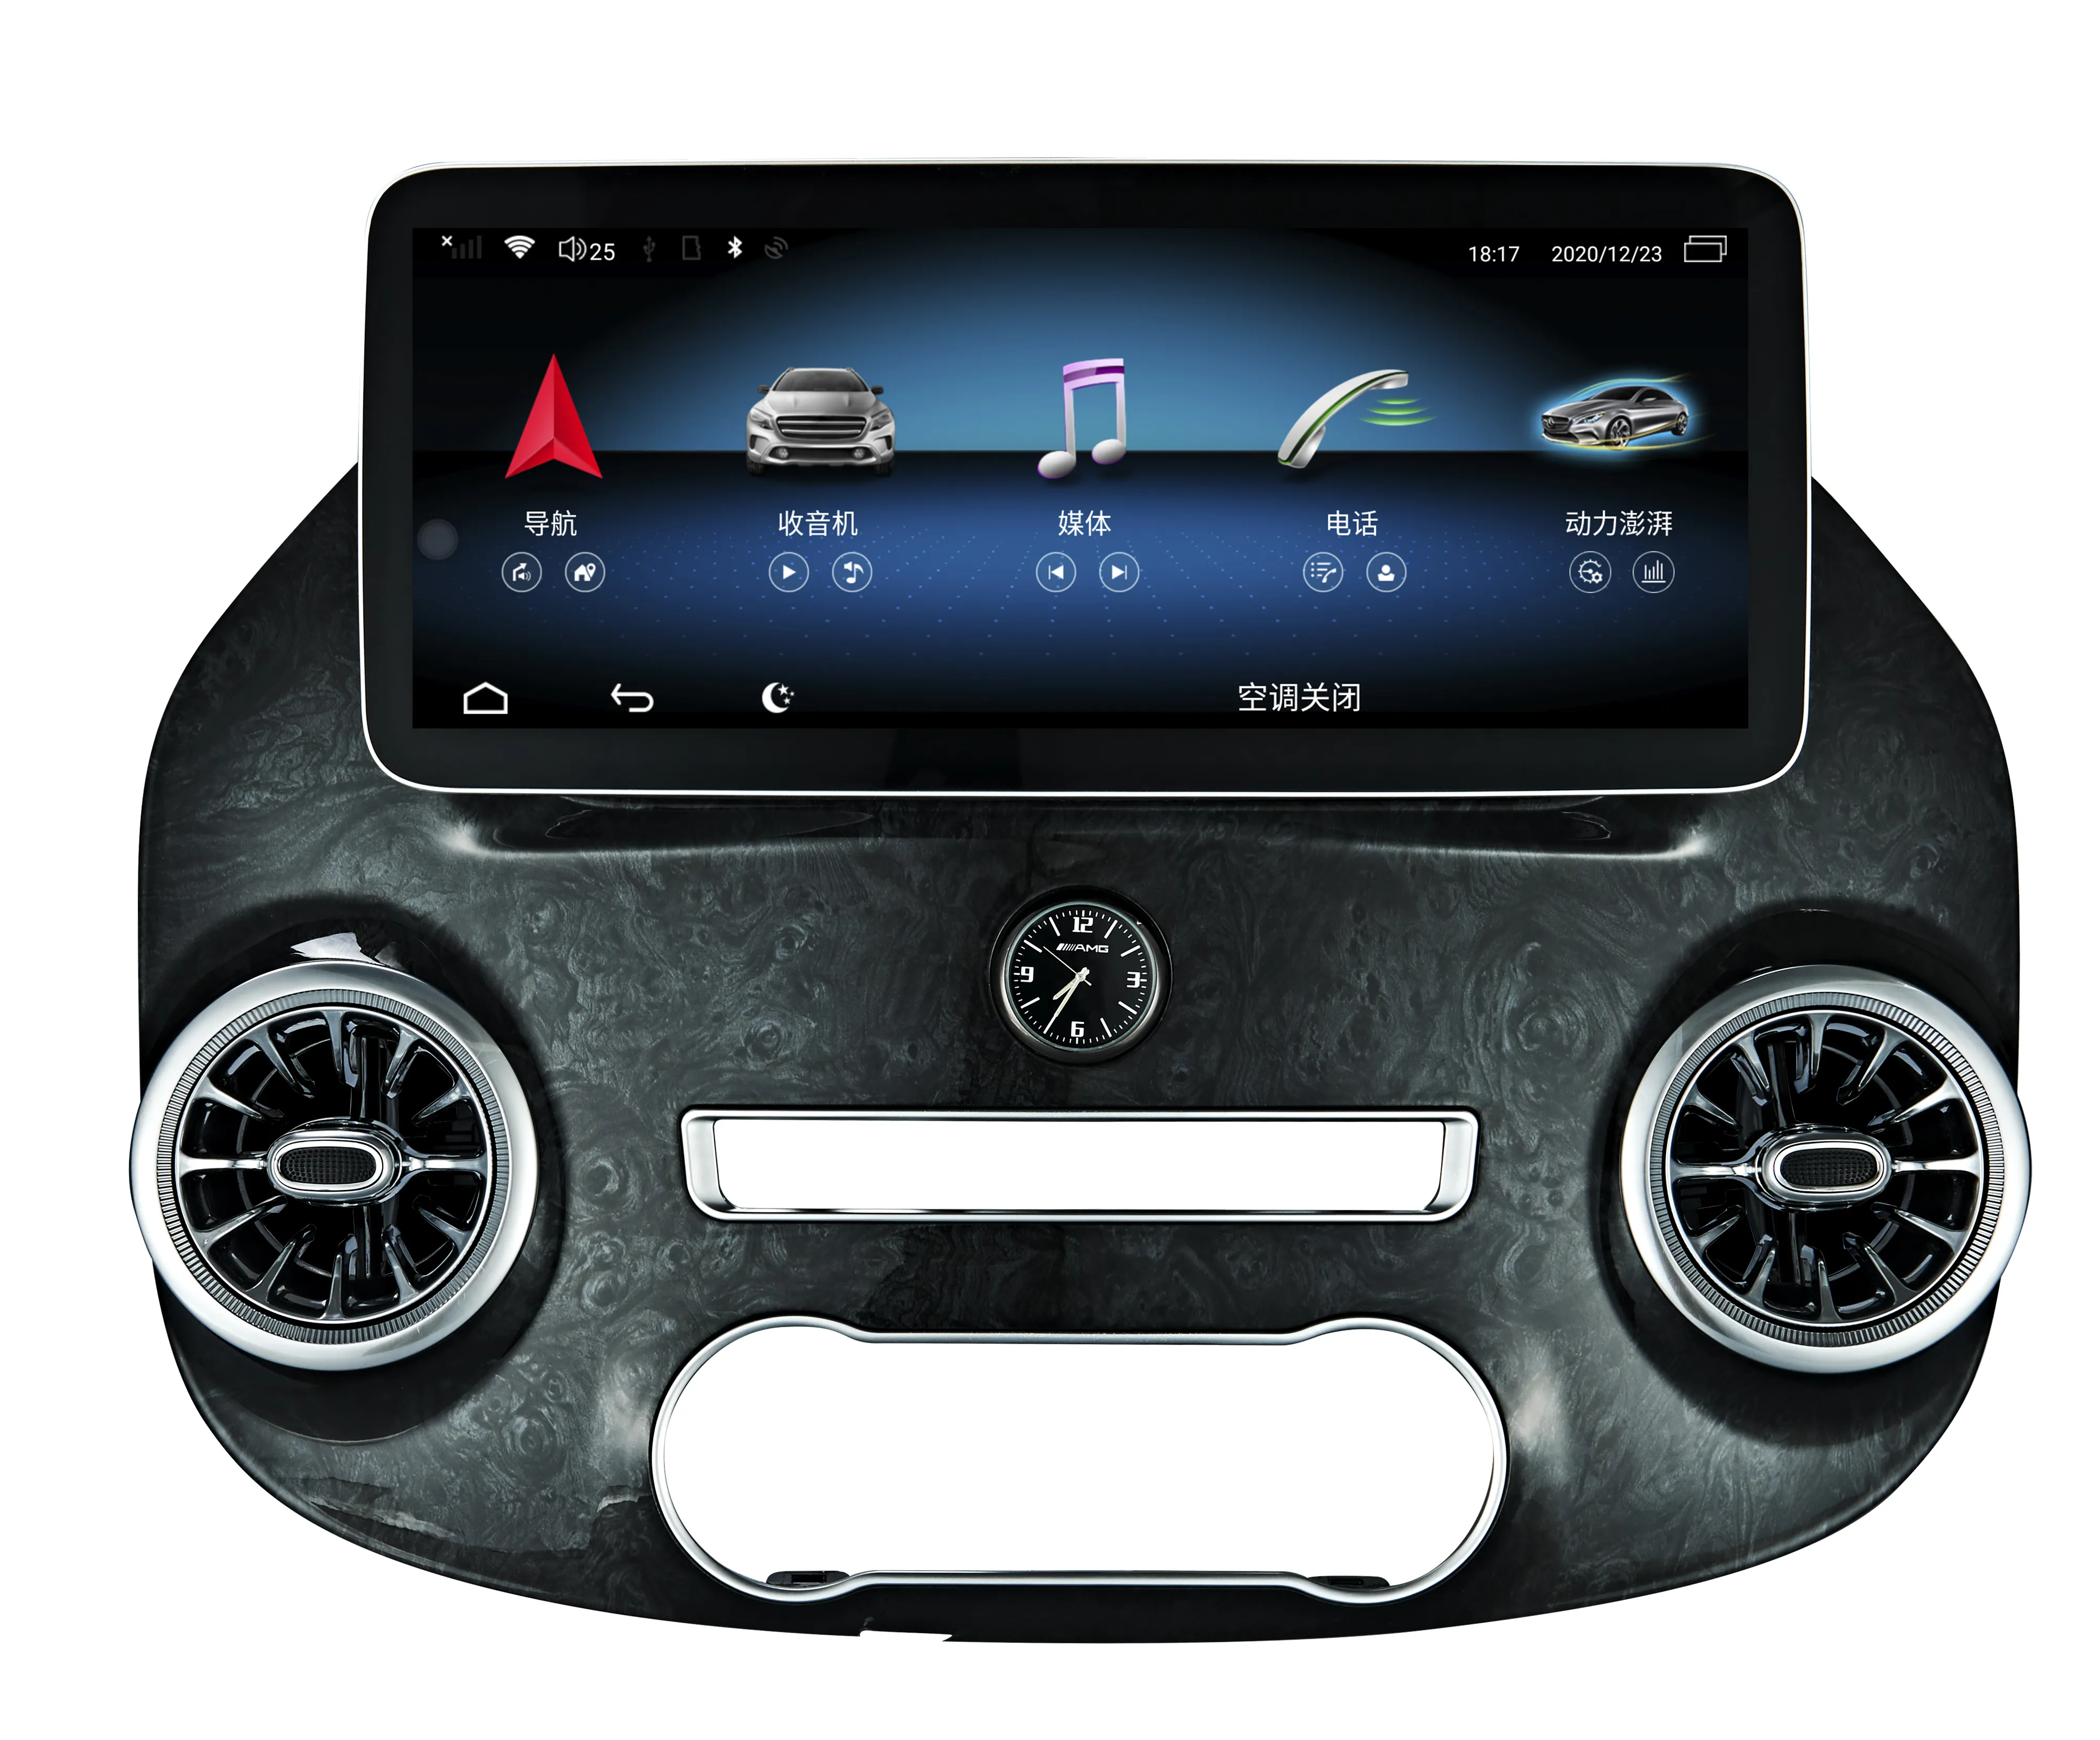 12.3 ''Android 10.0 Auto Video 4G 64G Auto Stereo Auto DVD-Player Für Mercedes Benz Vito Mit 360 Panorama 8 Core 14nm